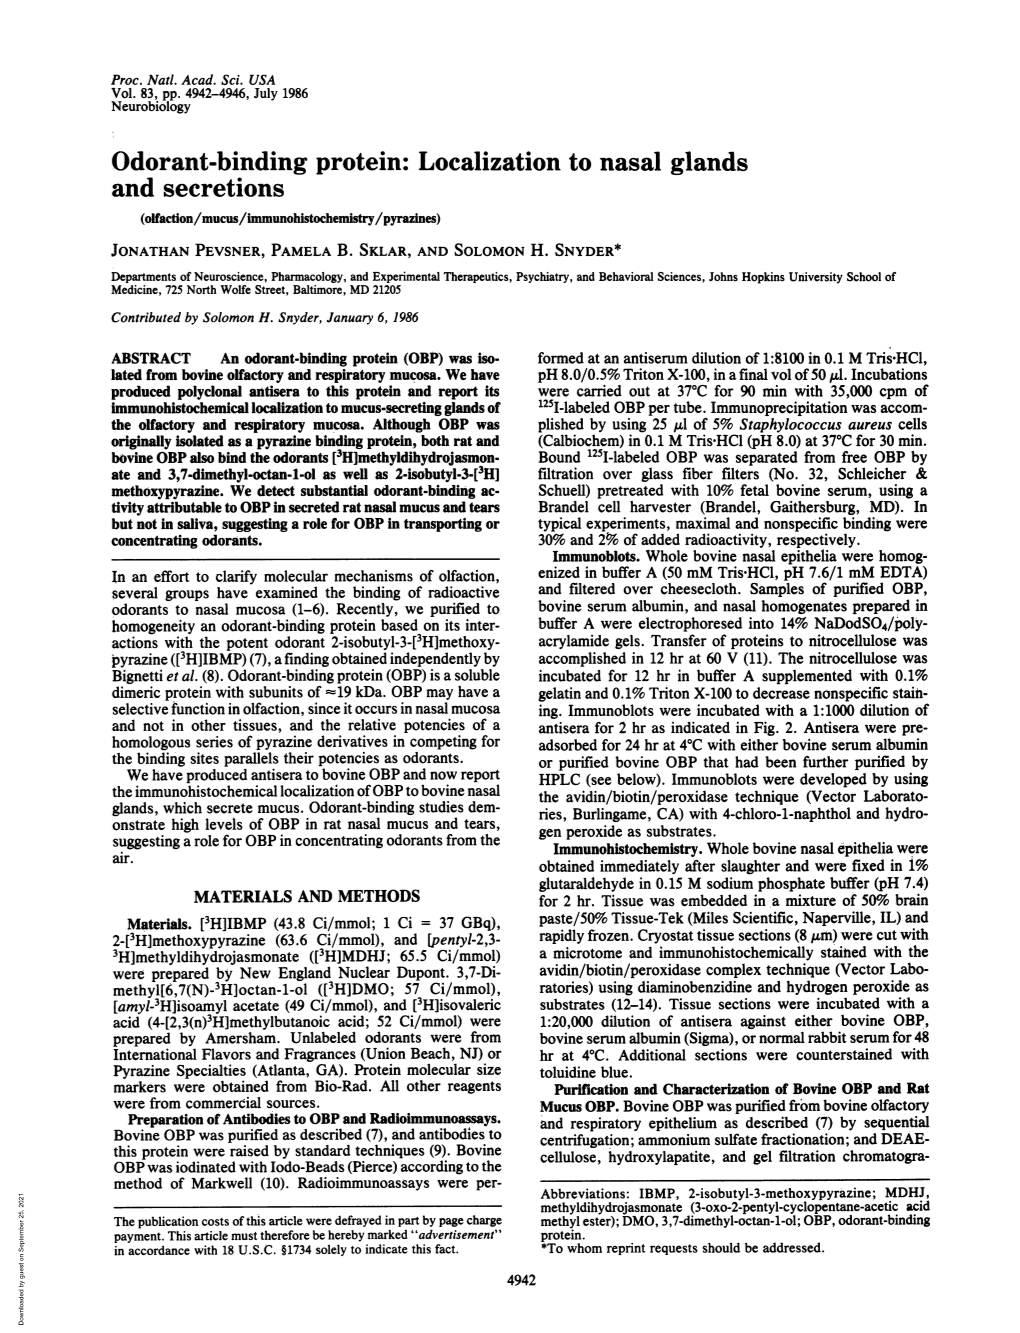 Odorant-Binding Protein: Localization to Nasal Glands and Secretions (Olfaction/Mucus/Immunohistochemistry/Pyrazines) JONATHAN PEVSNER, PAMELA B